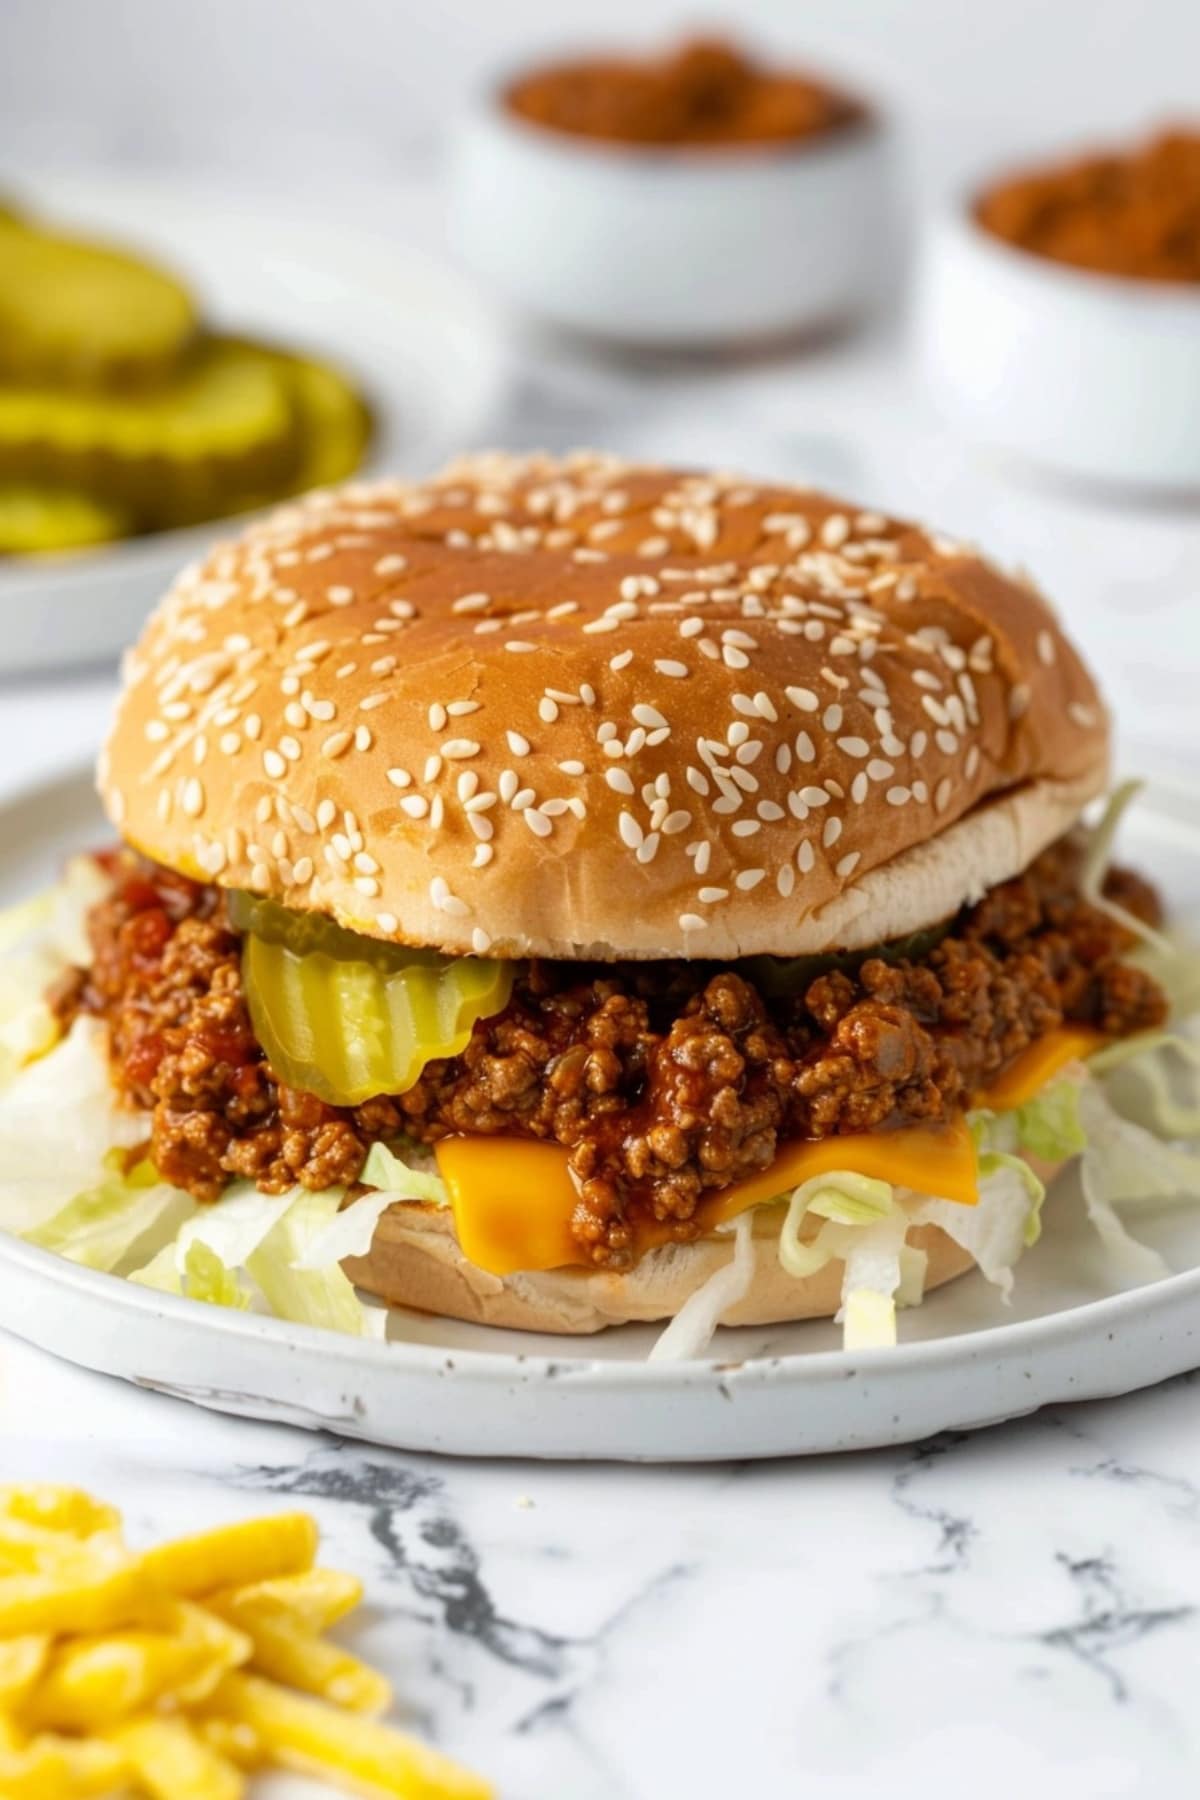 Big Mac sloppy joe burger in a plate.